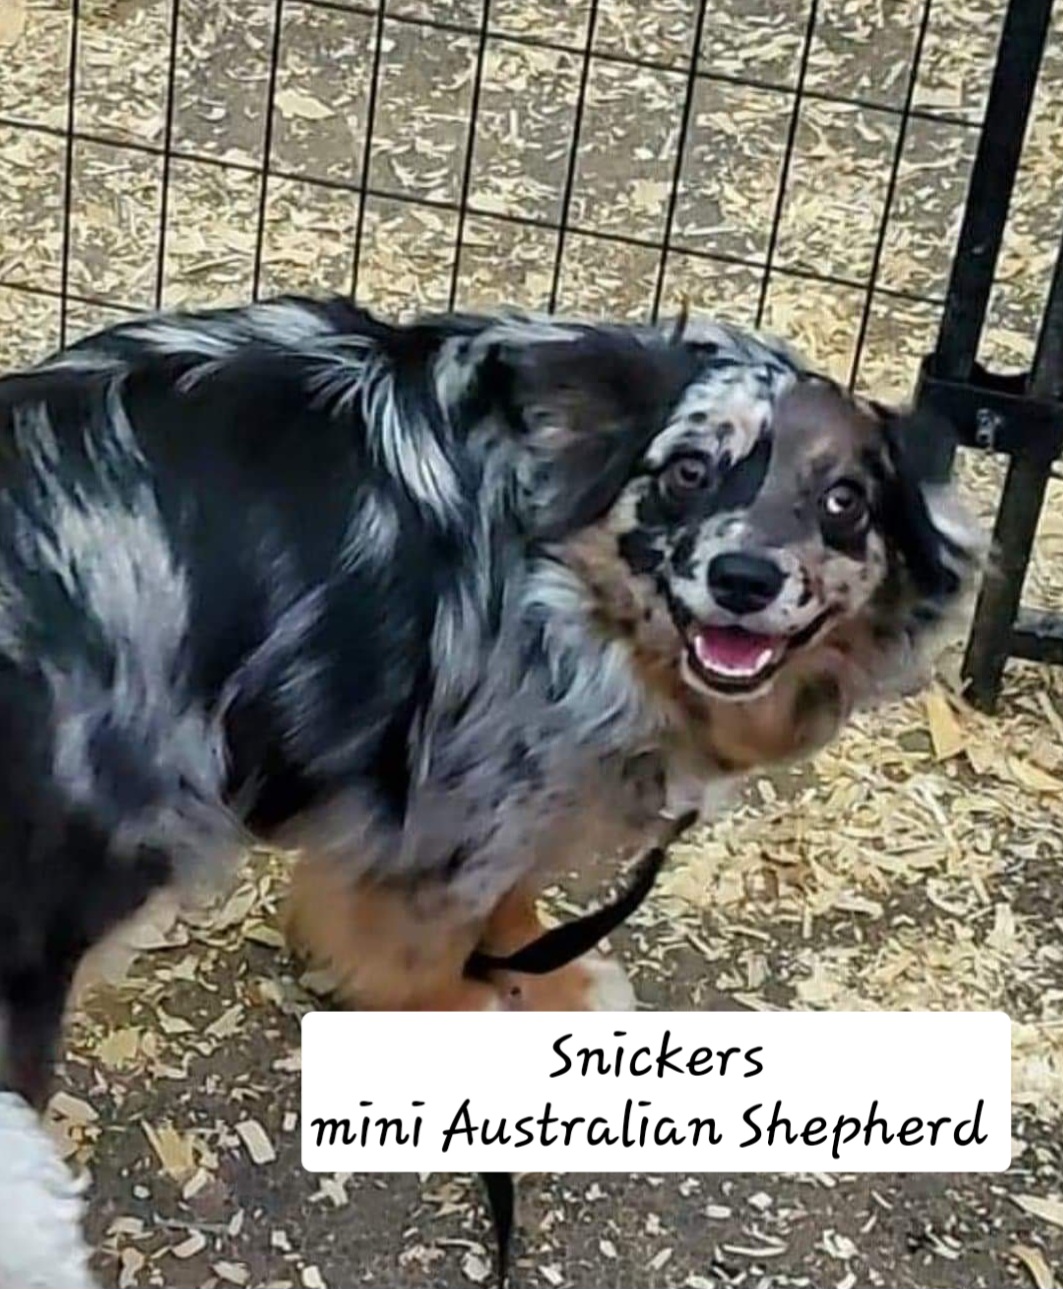 Mini Australian Shepherd named Snickers